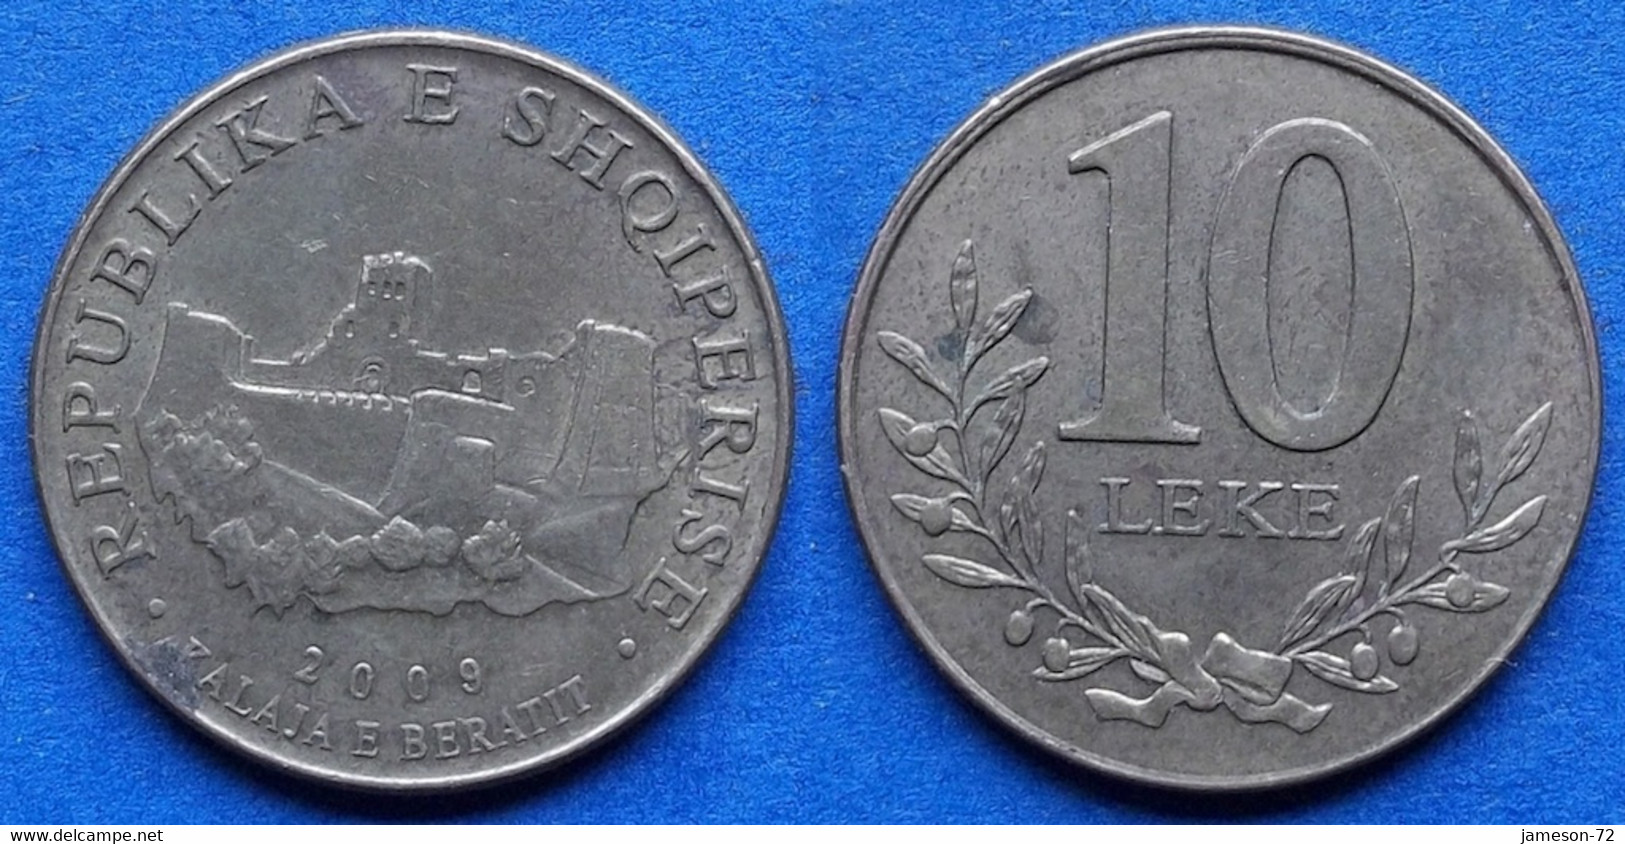 ALBANIA - 10 Leke 2009 "Berat Castle" KM# 77a Republic (1996) - Edelweiss Coins - Albania